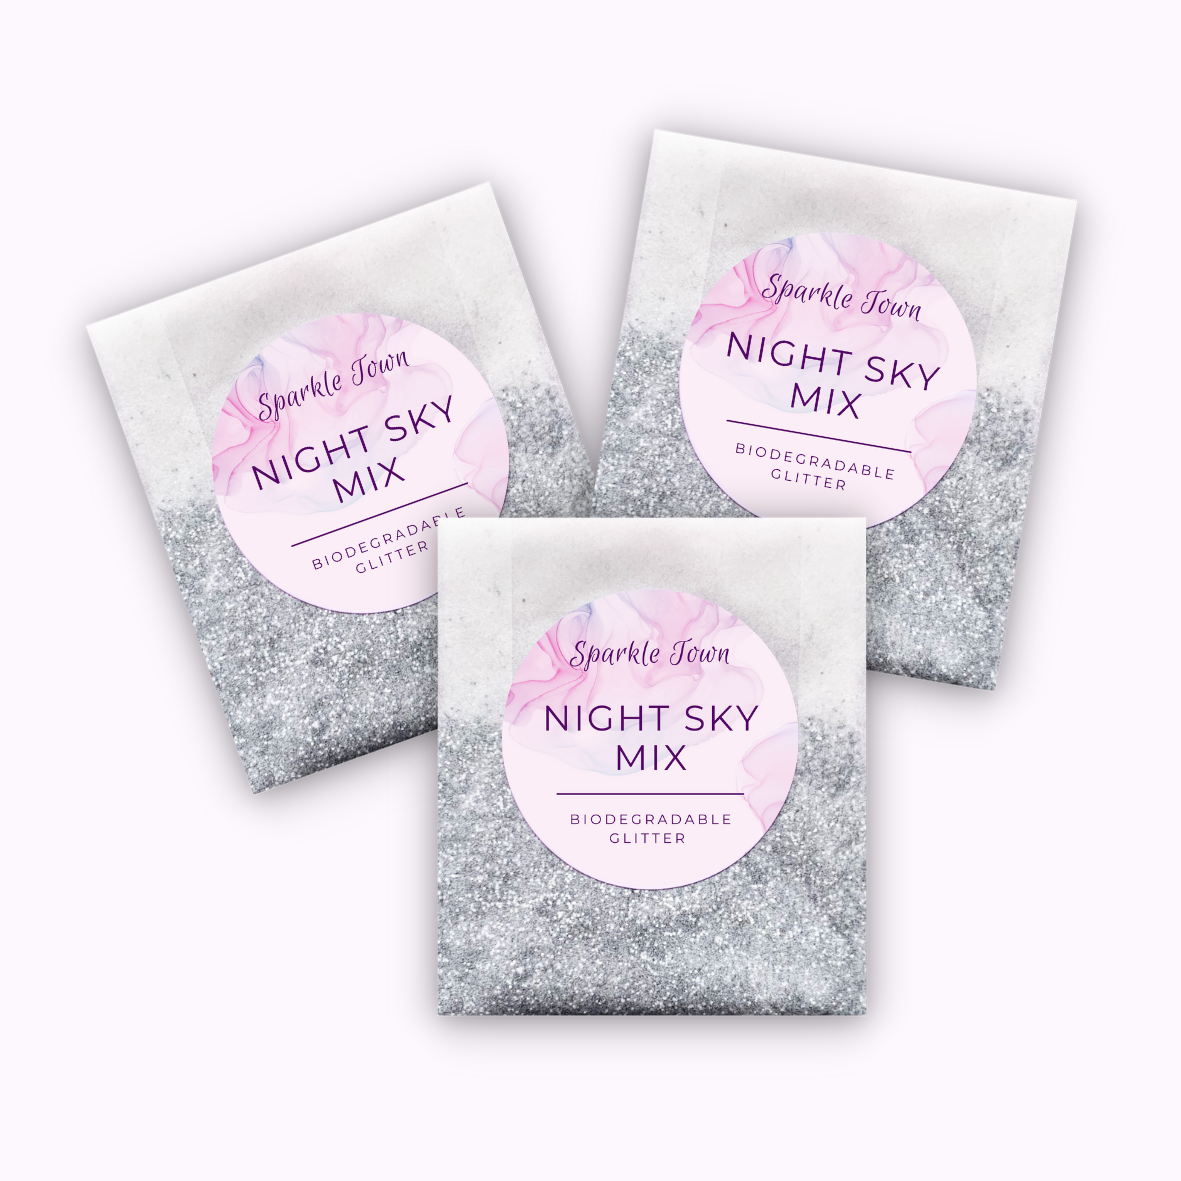 Night Sky Mix Biodegradable Glitter